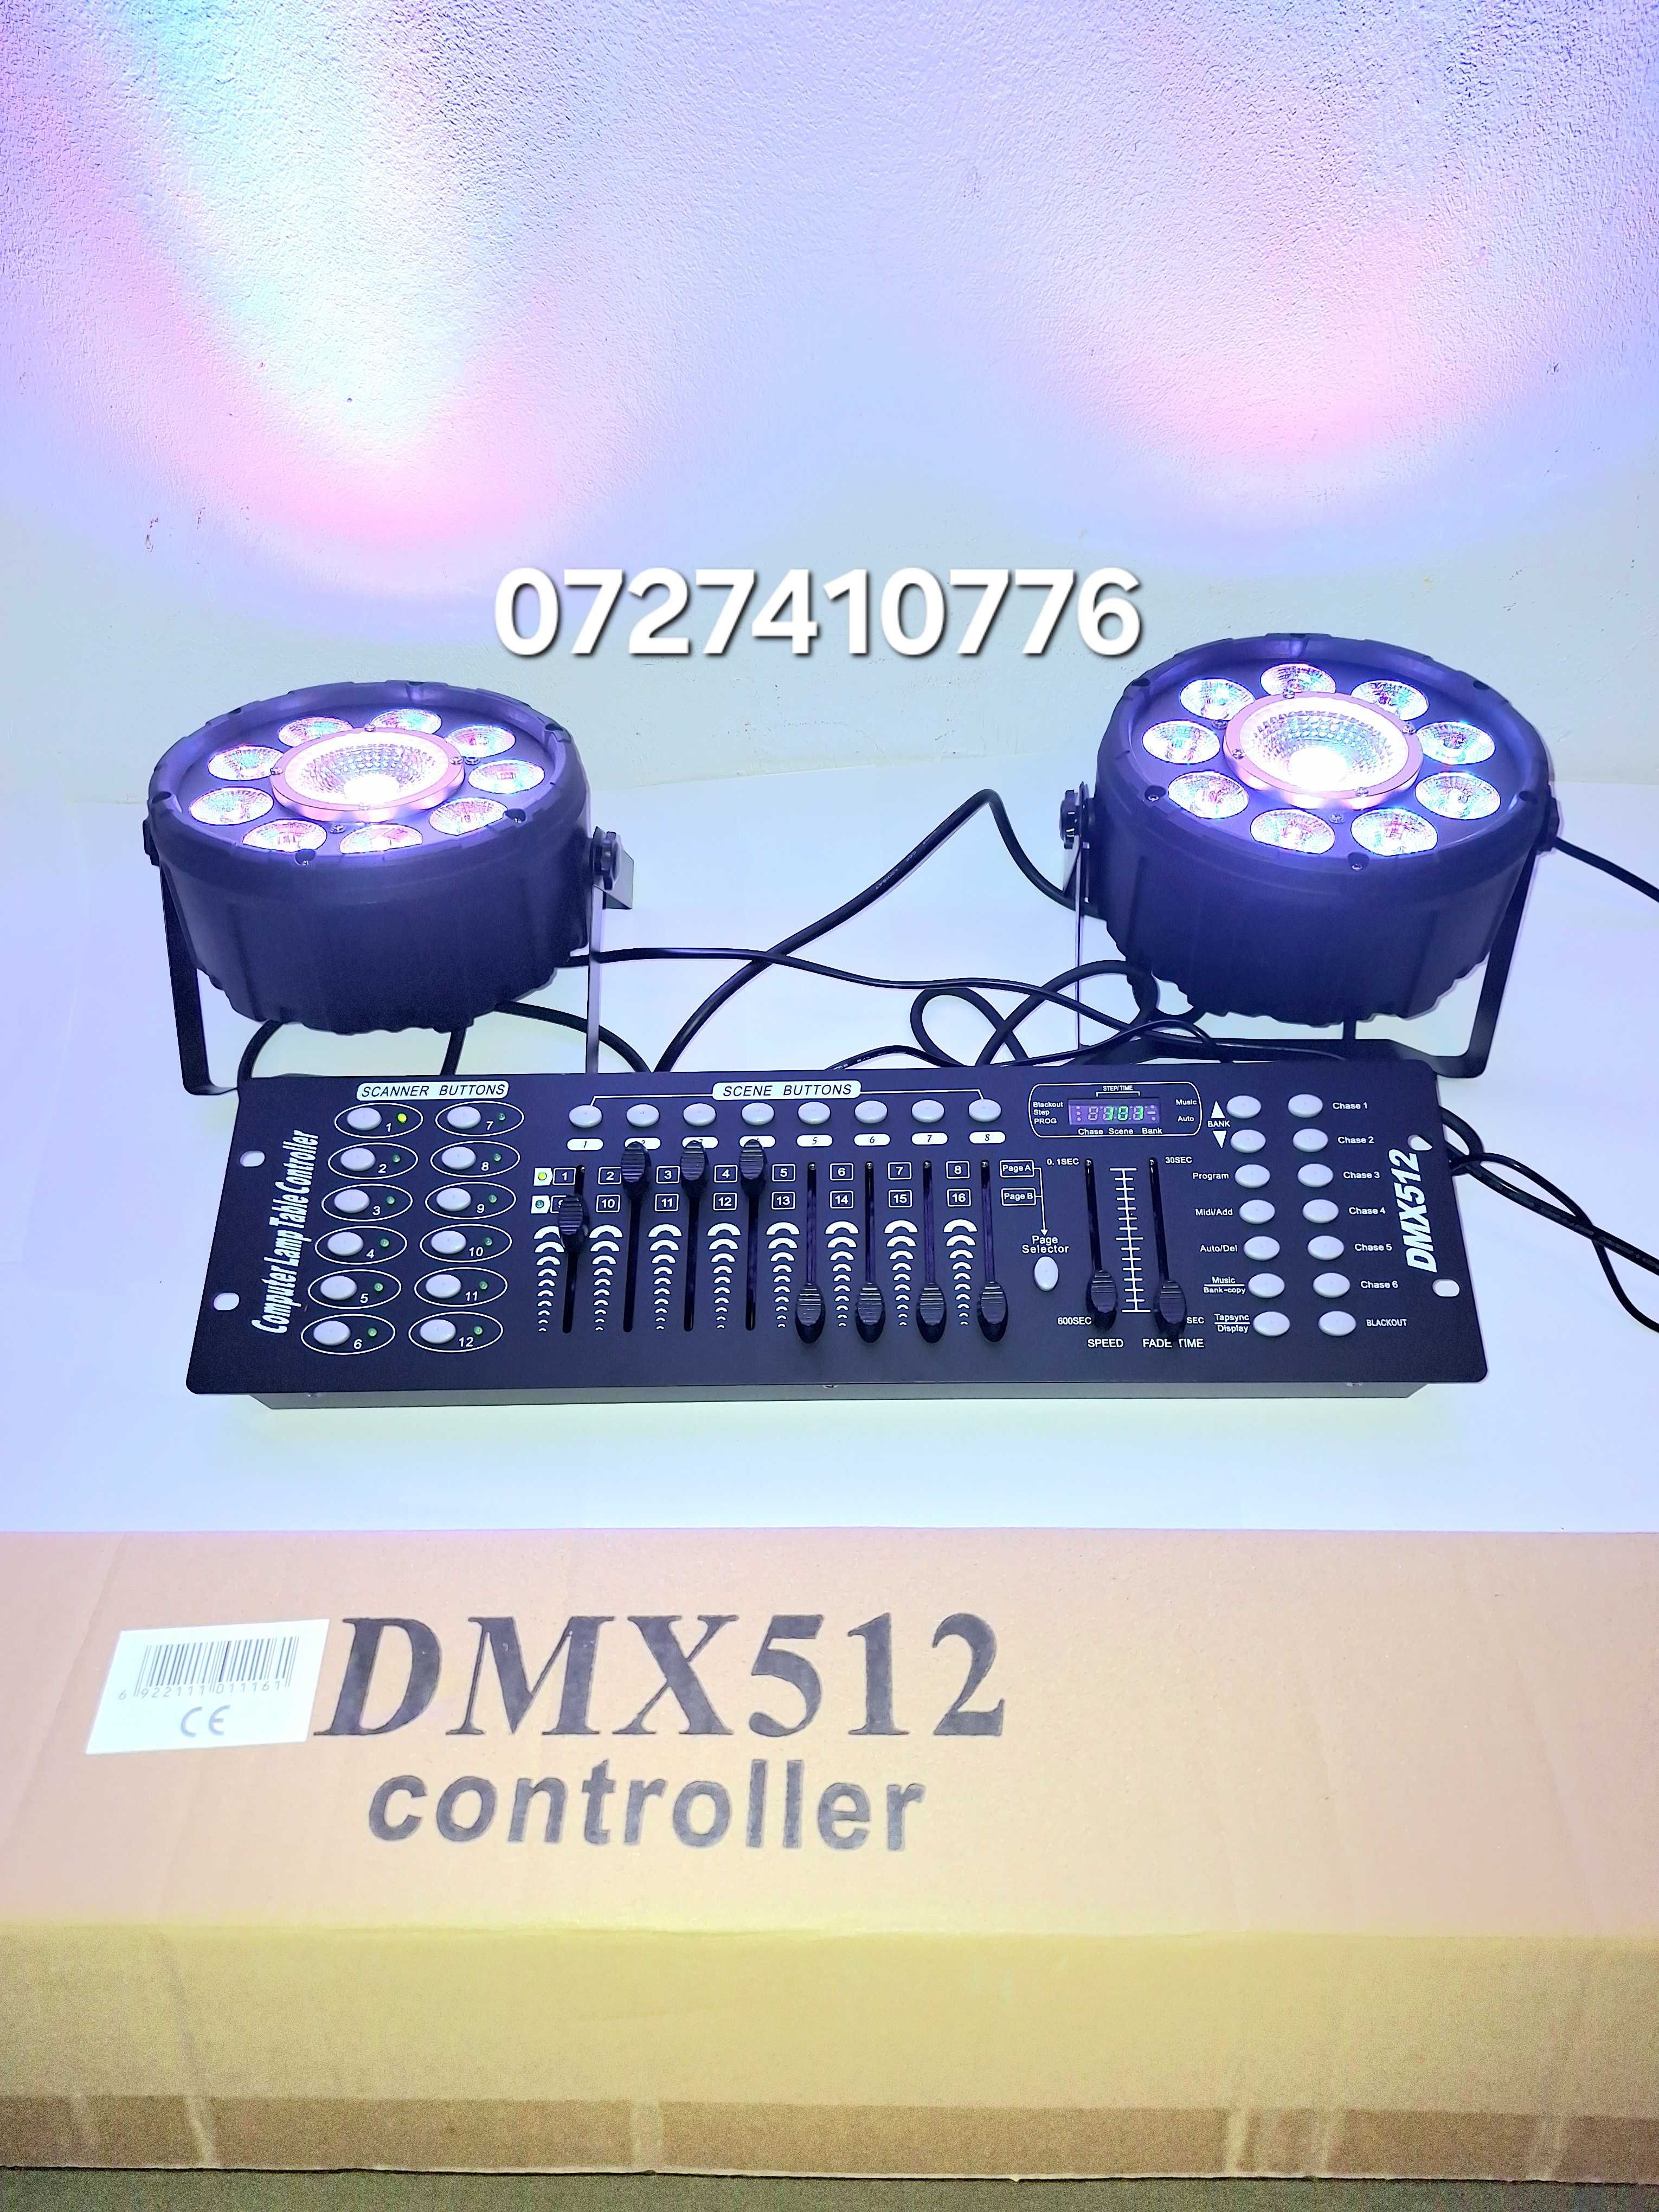 Dmx 512 192 canale LUMINI ARHITECTURALE controller dmx club dj consola